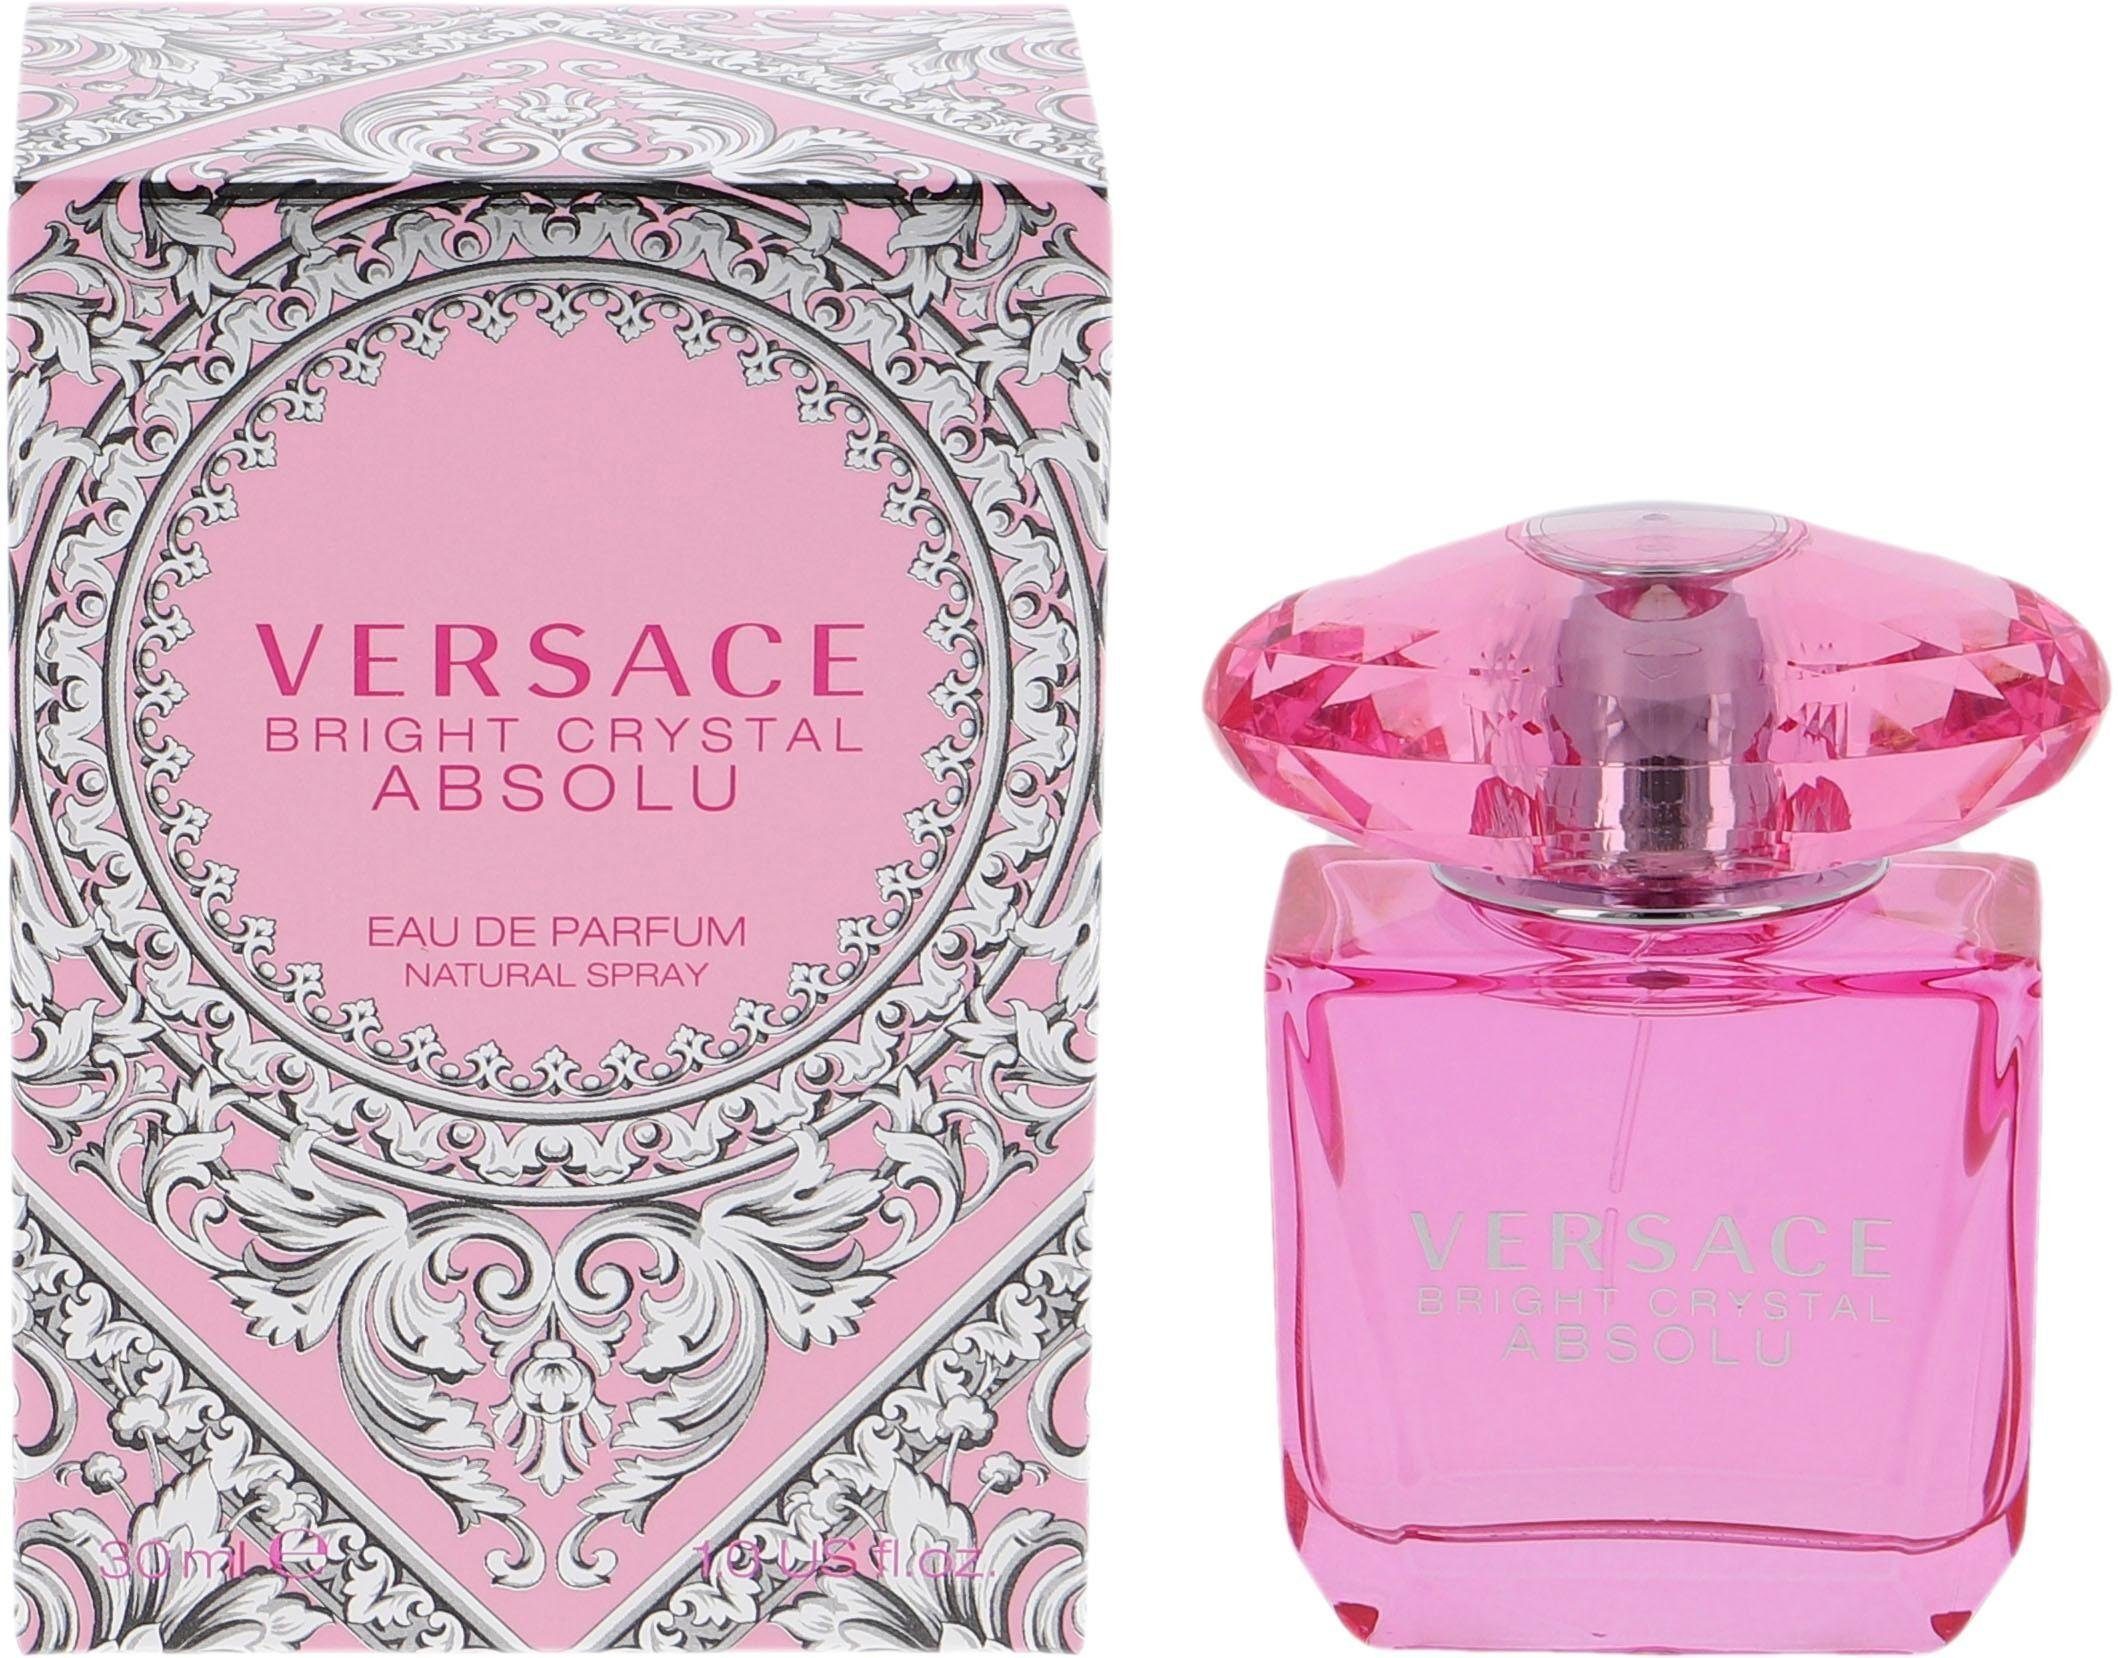 Versace Eau de Parfum Crystal Versace Bright Absolu